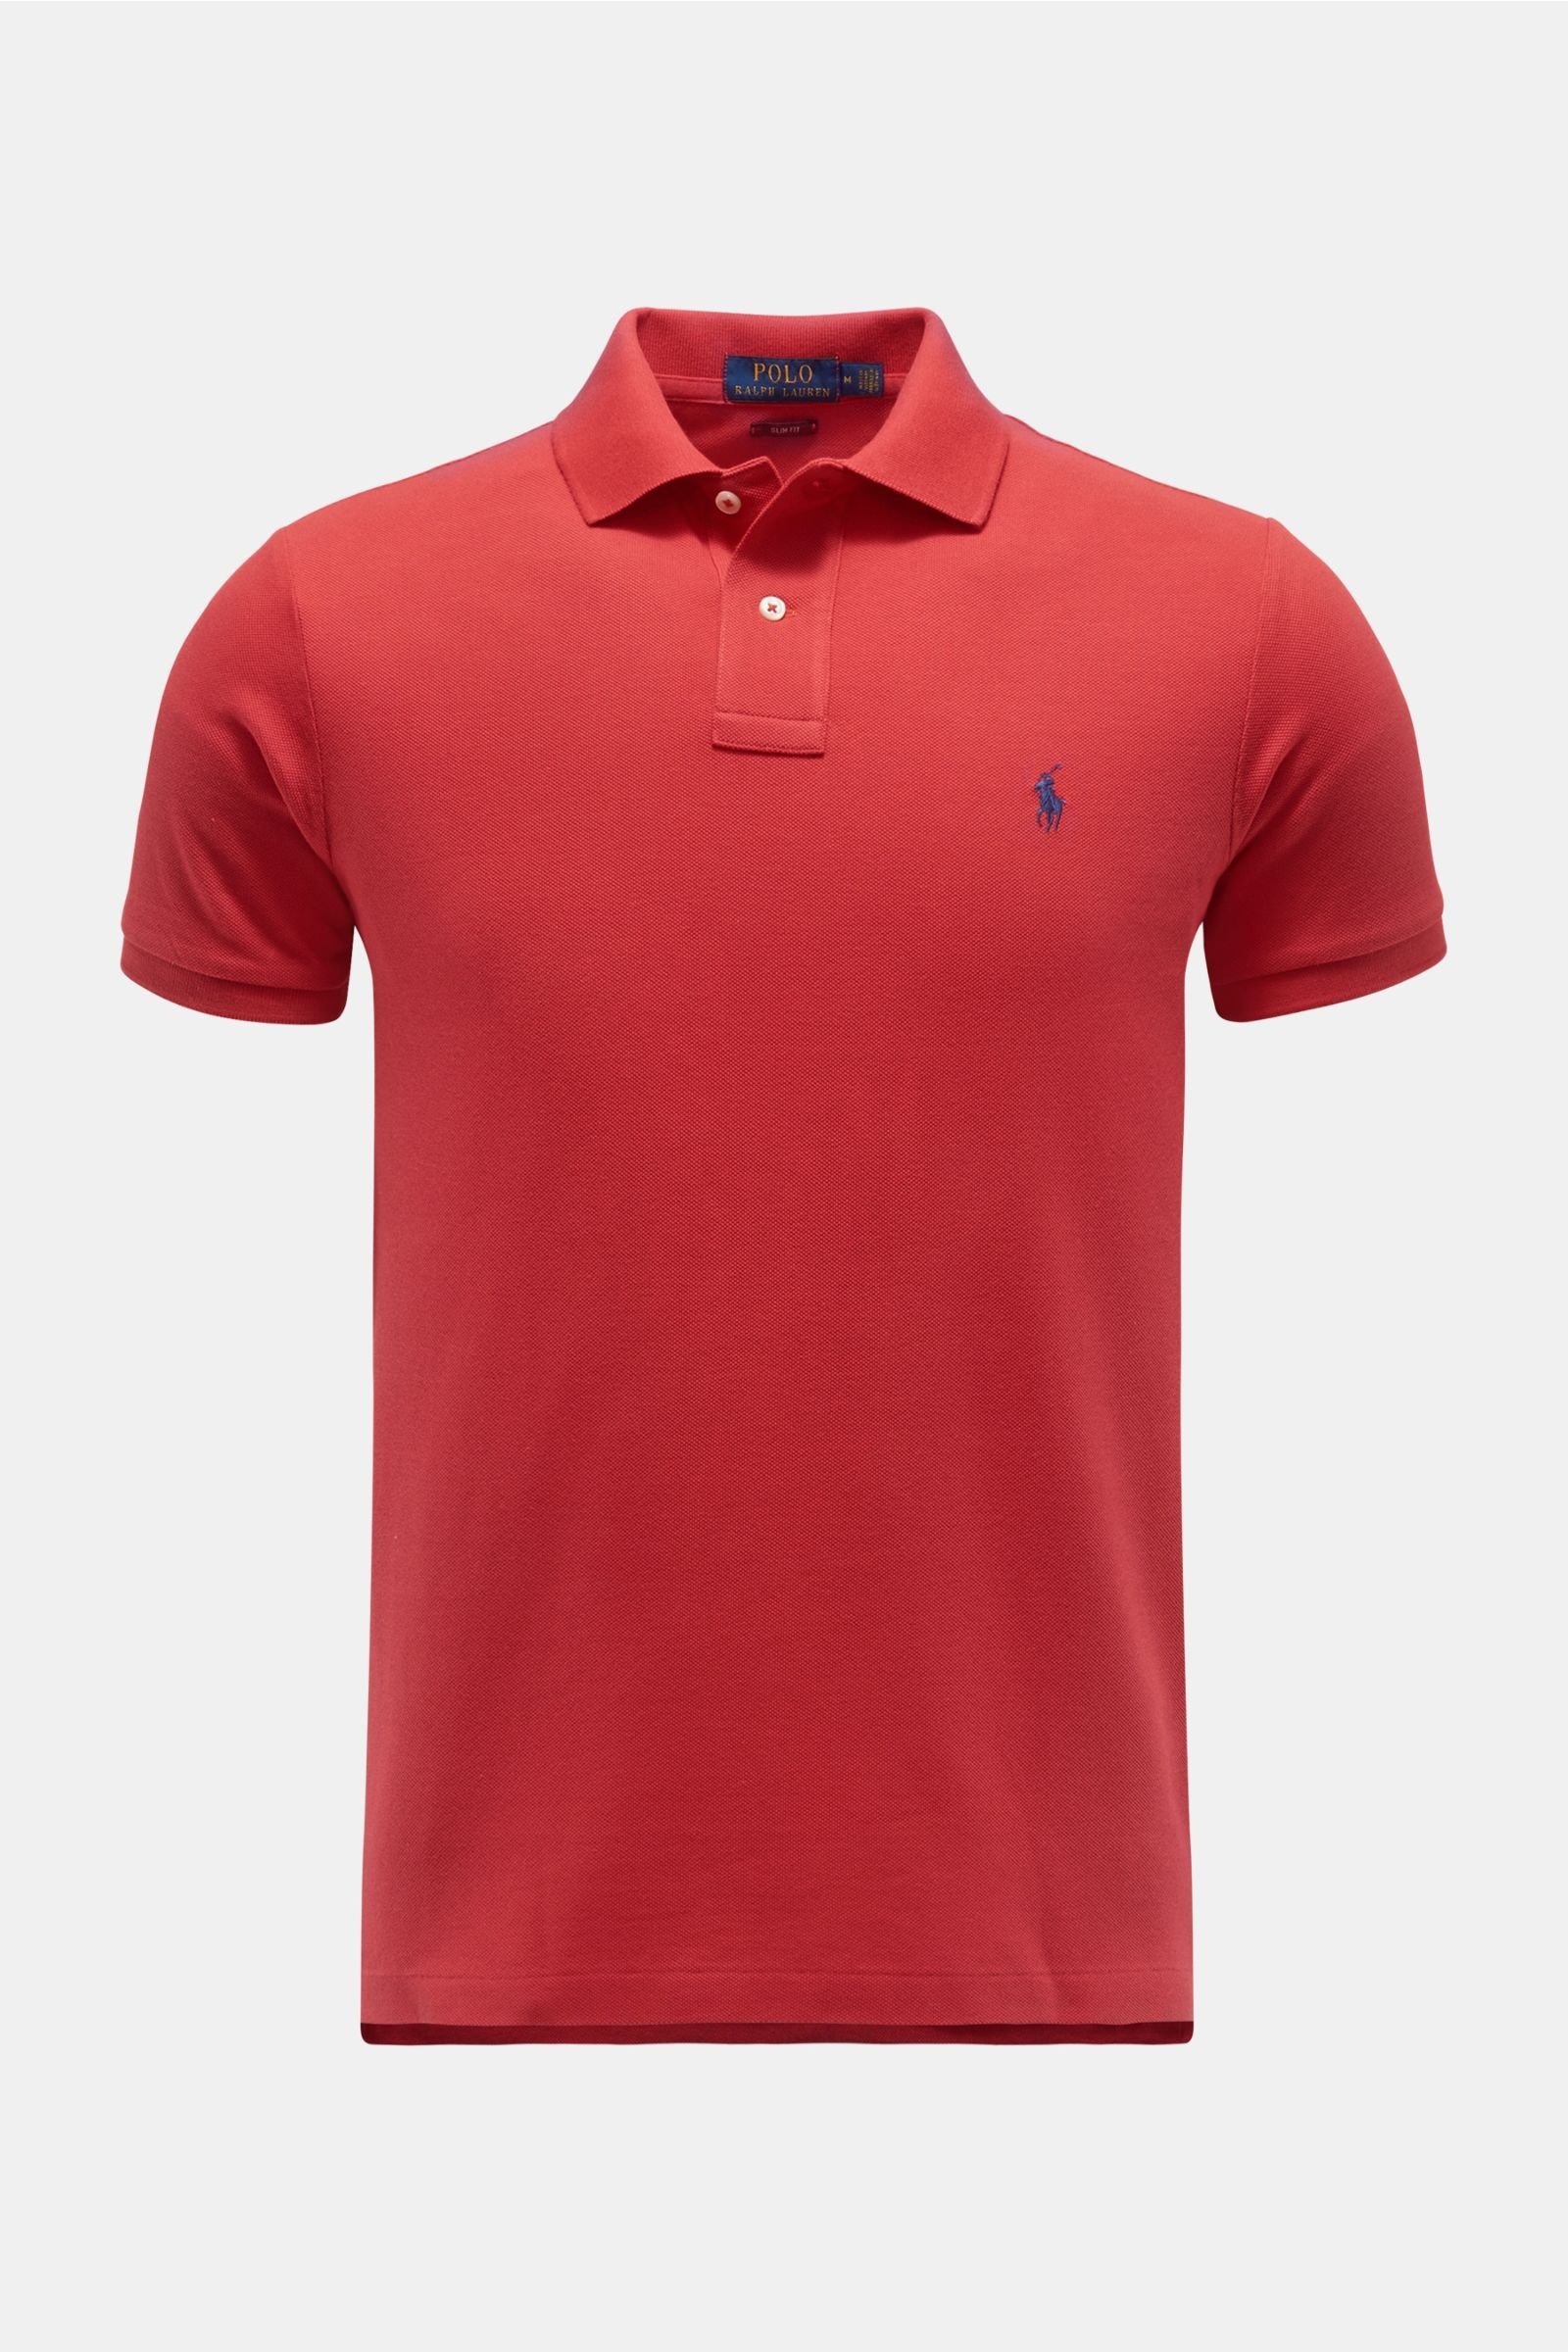 Polo shirt light red